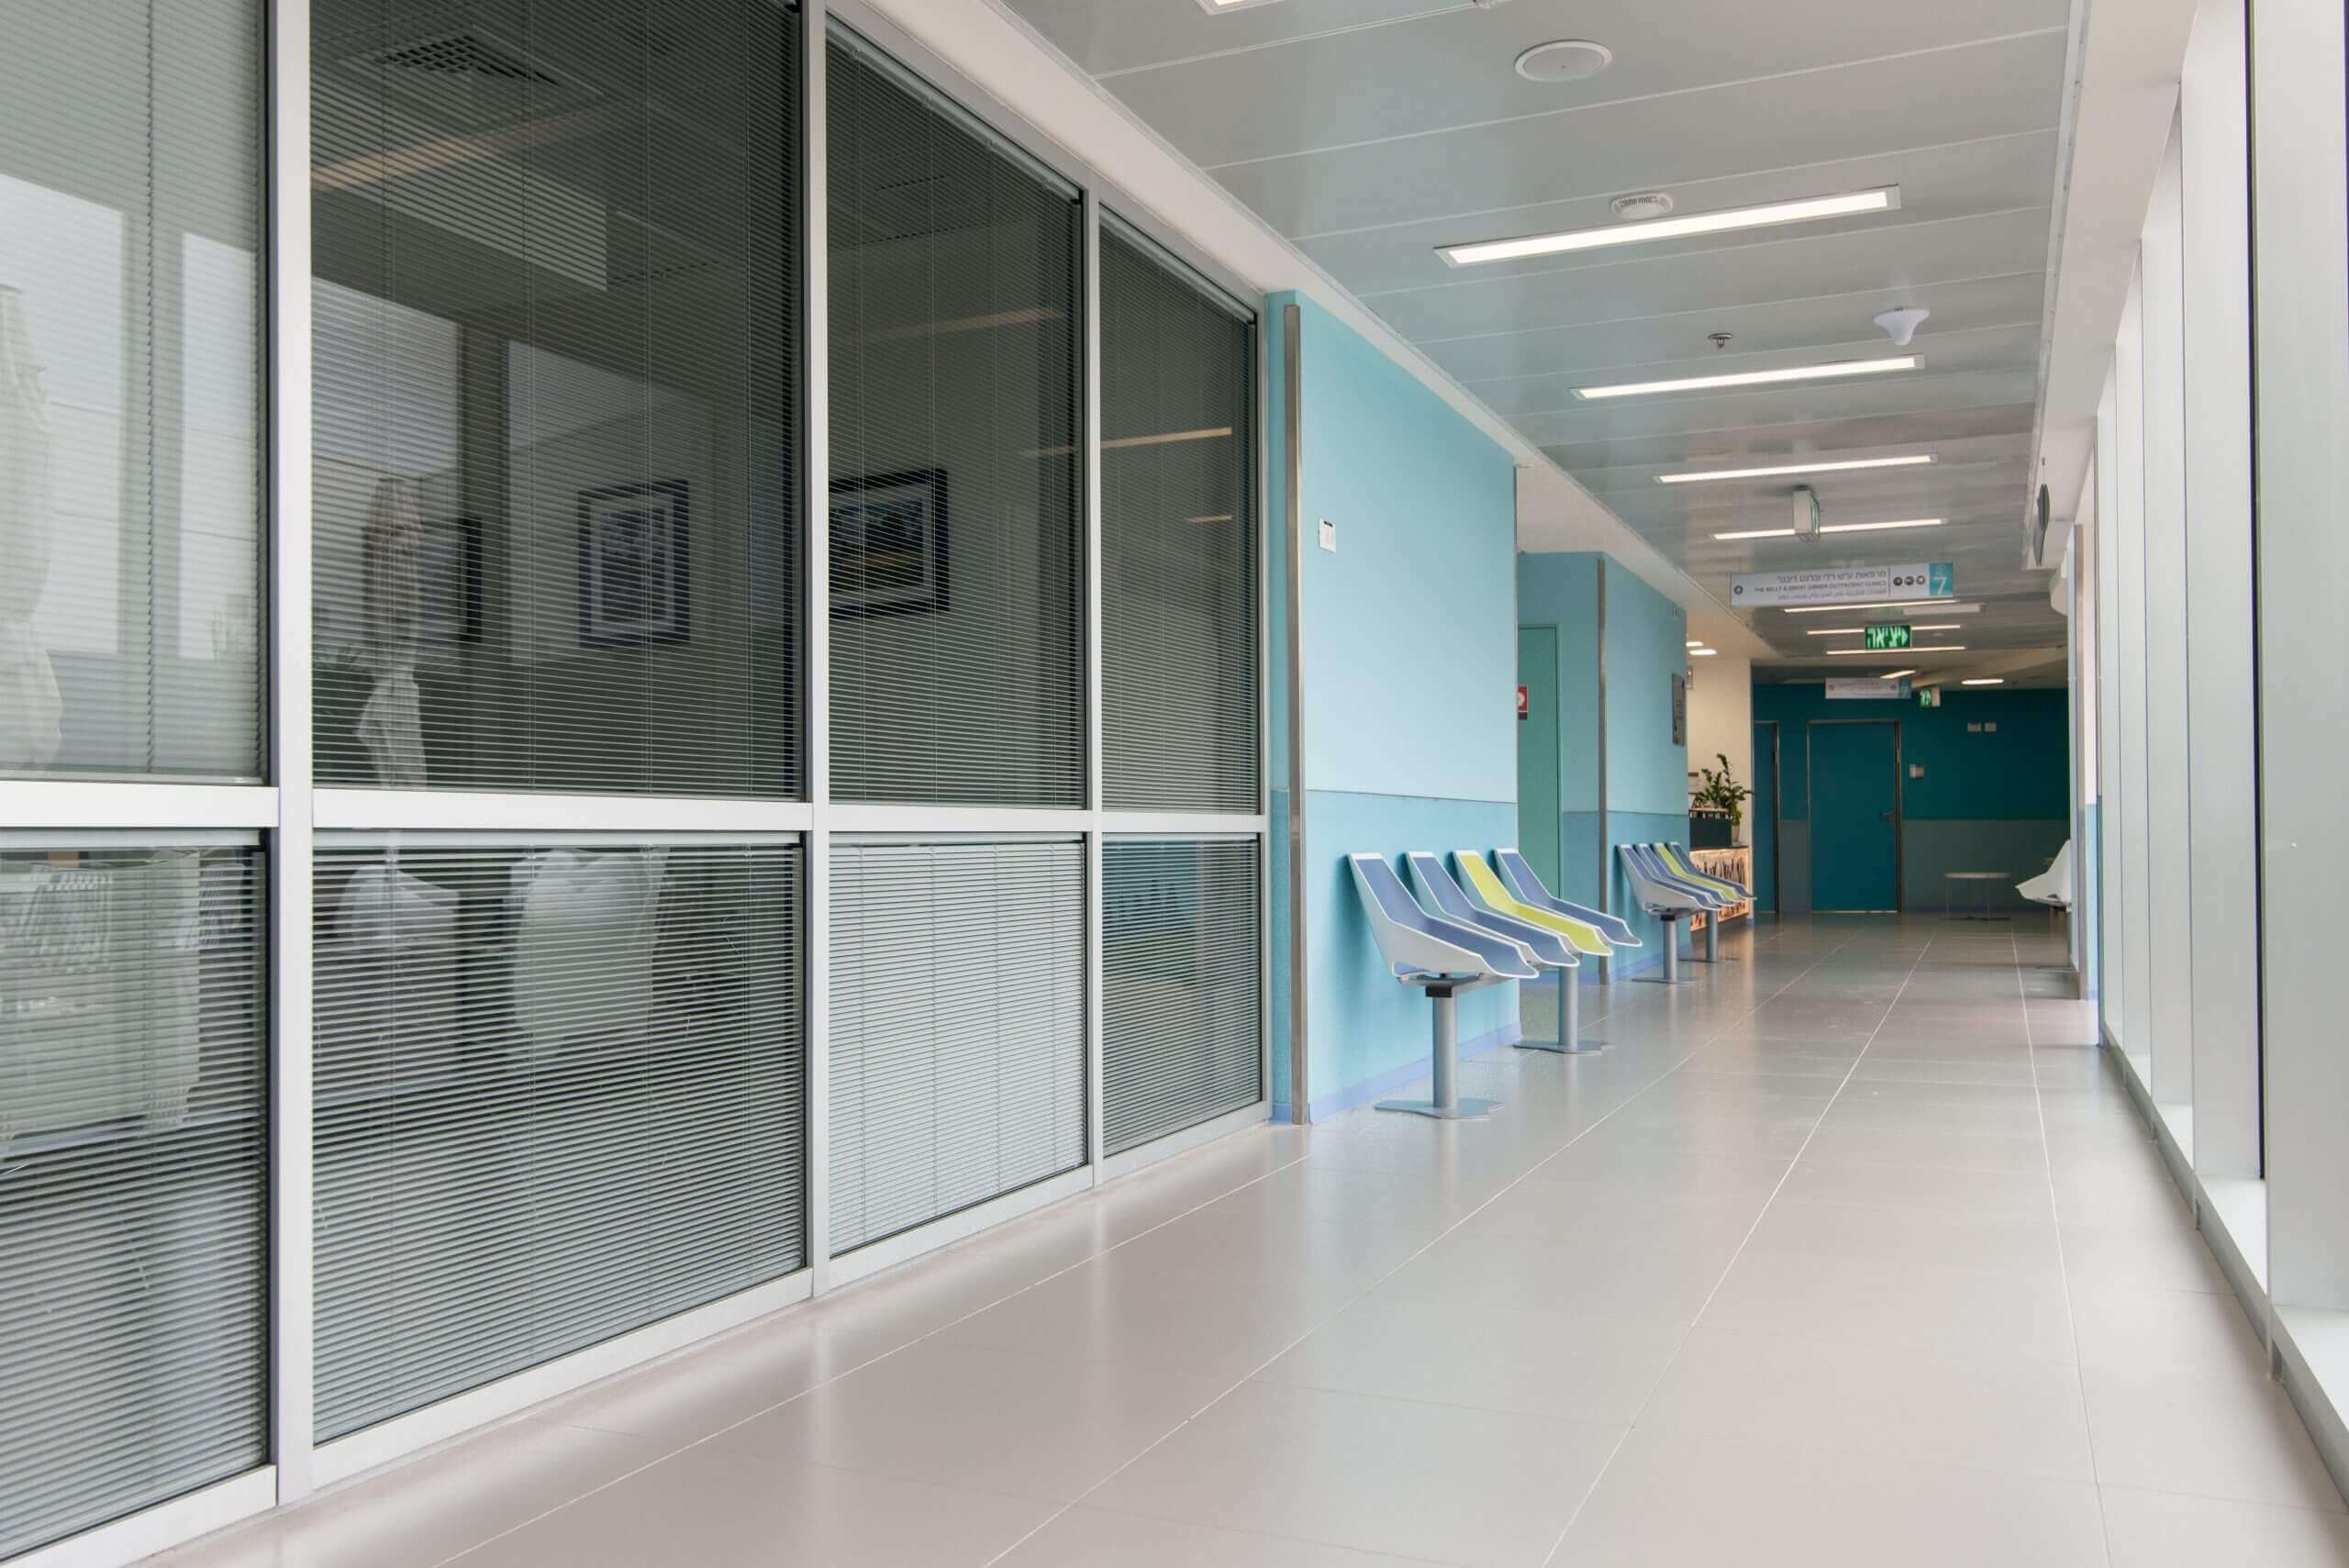 Belfast City Hospital benefits from Morley expertise